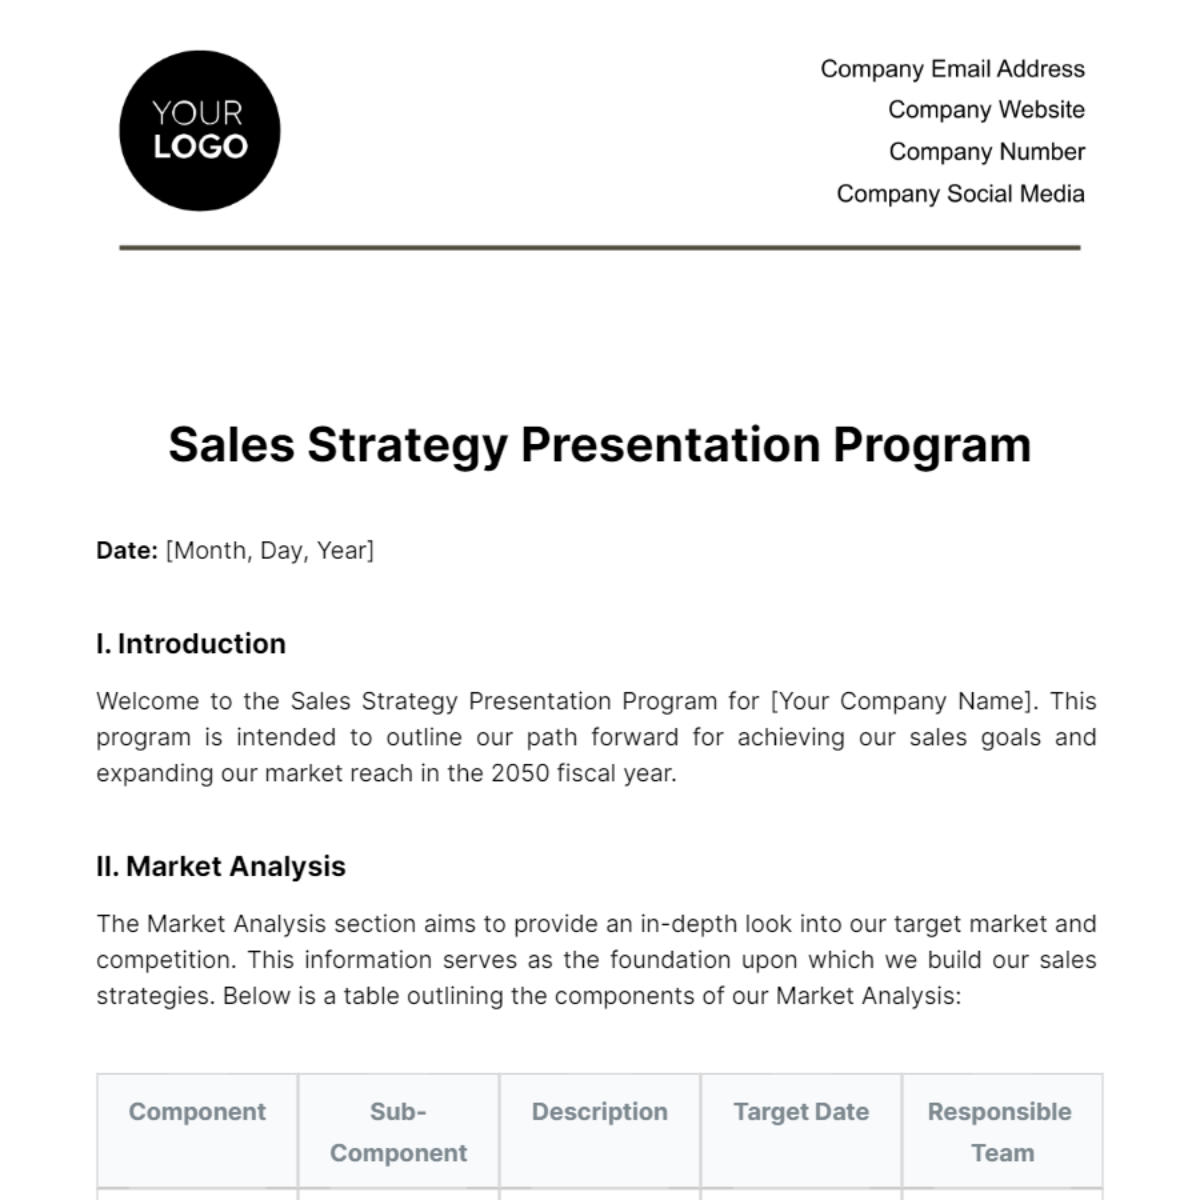 Sales Strategy Presentation Program Template